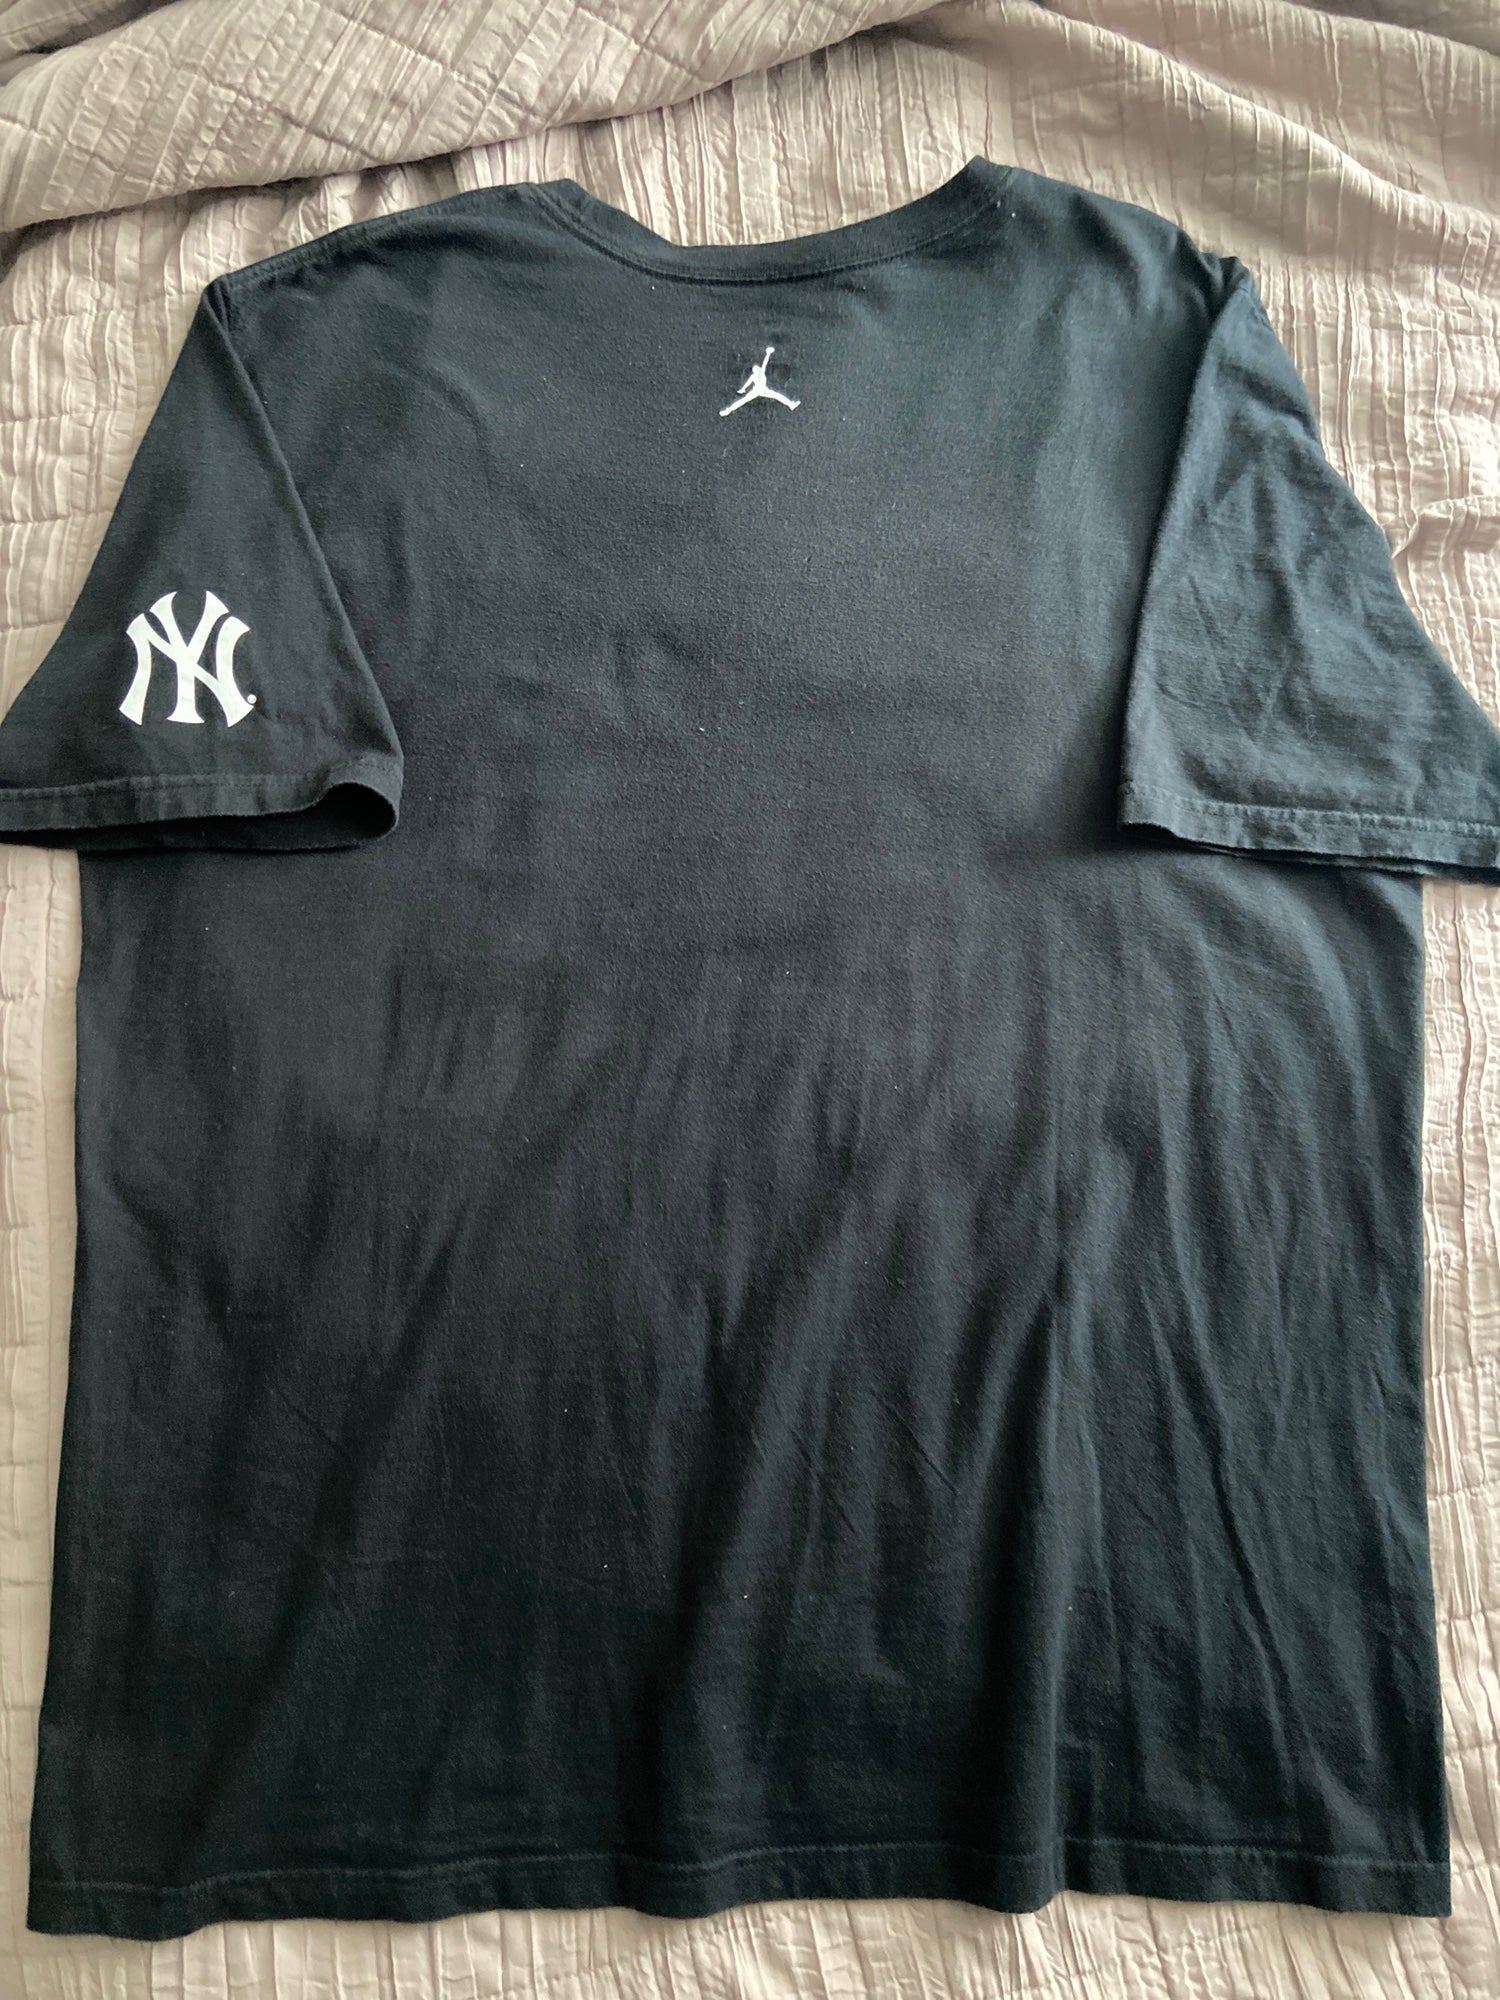 Respect New York Yankees TShirt - Yeswefollow